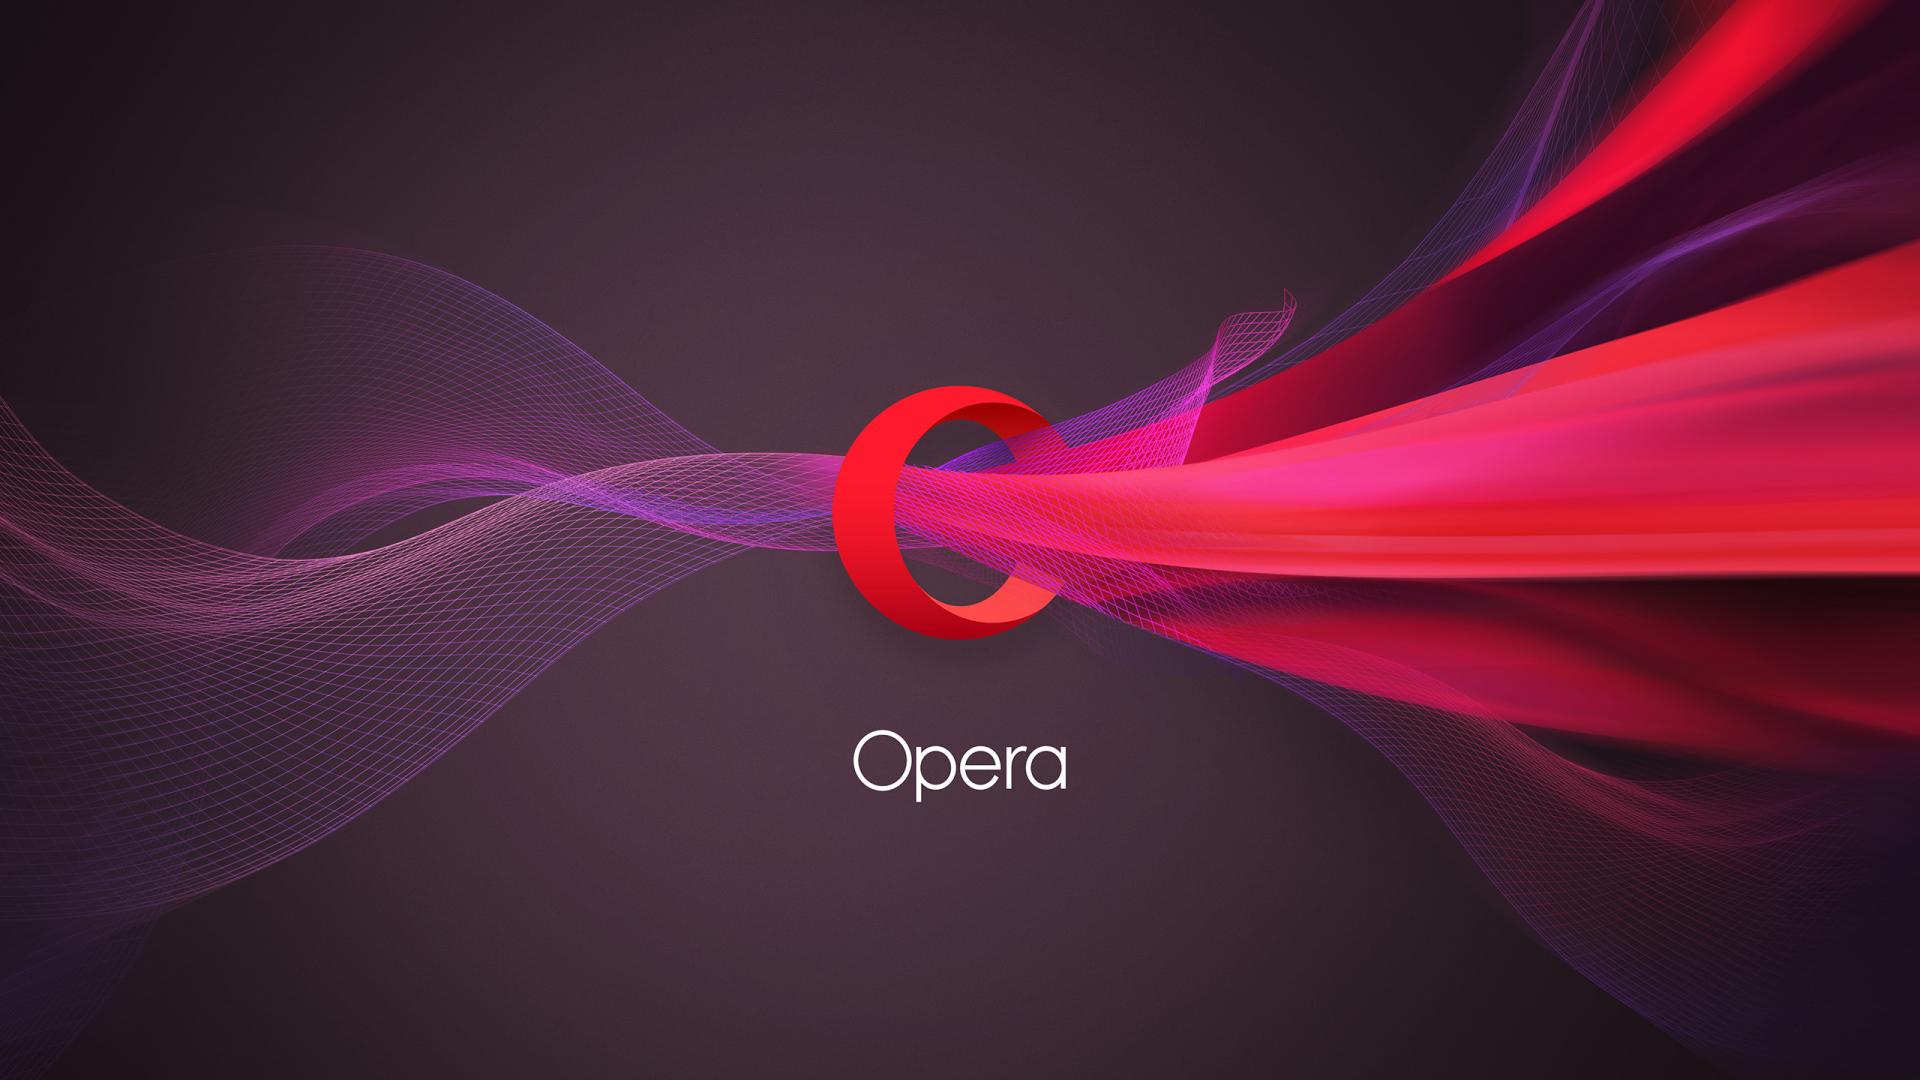 Opera GX Mobile